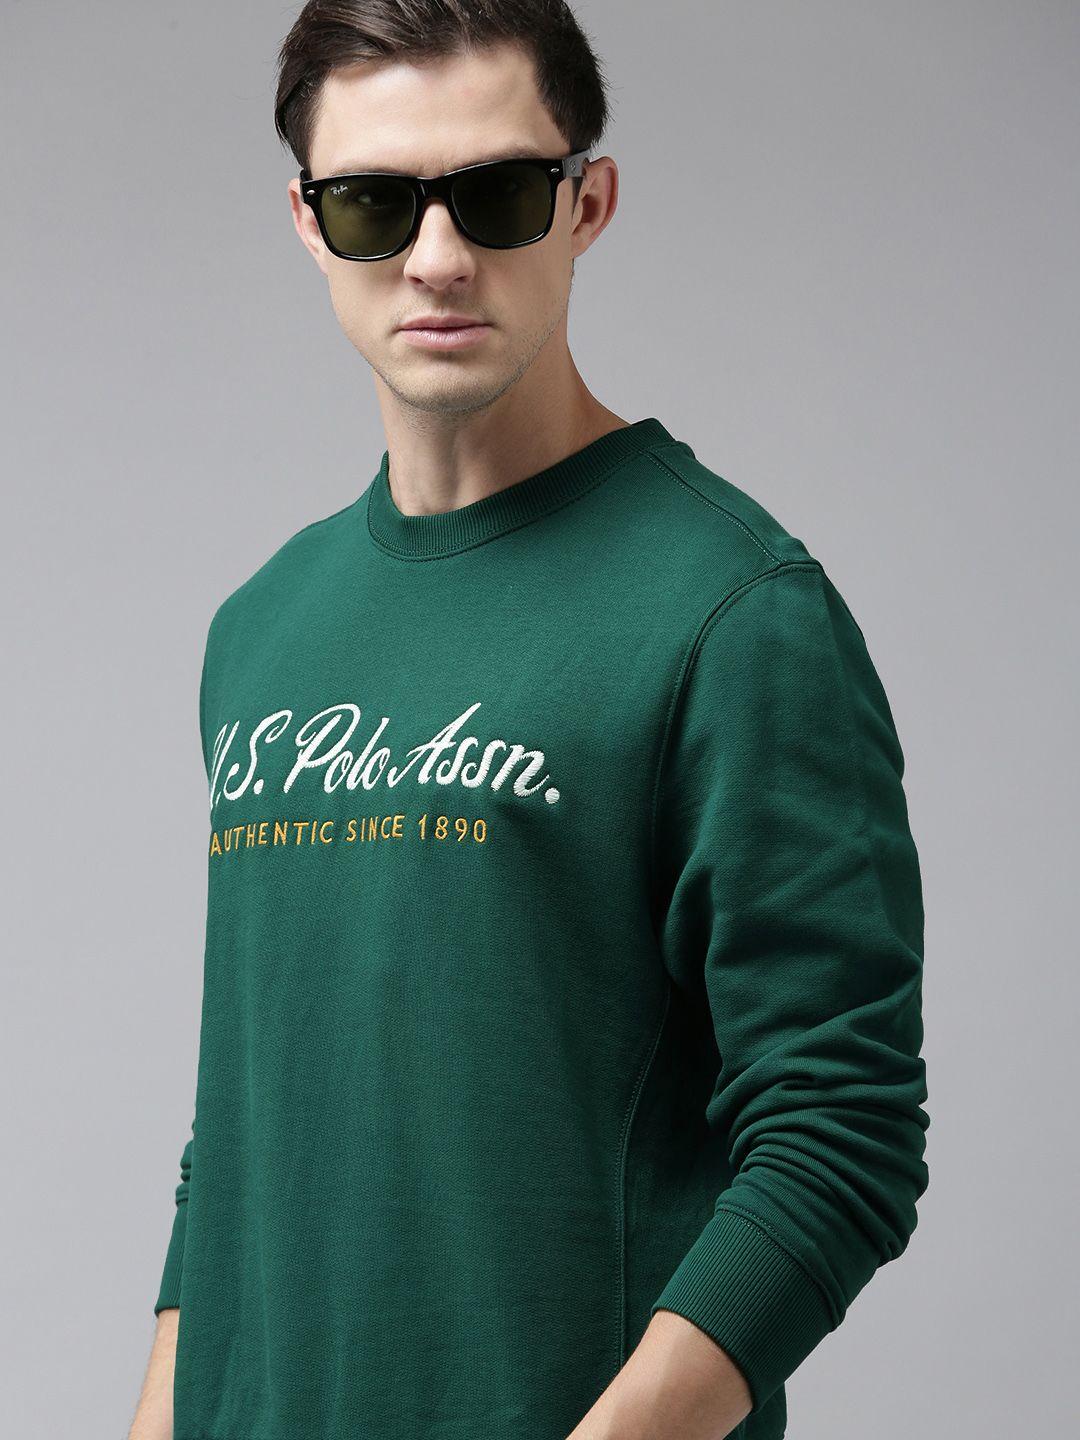 u s polo assn men green printed sweatshirt